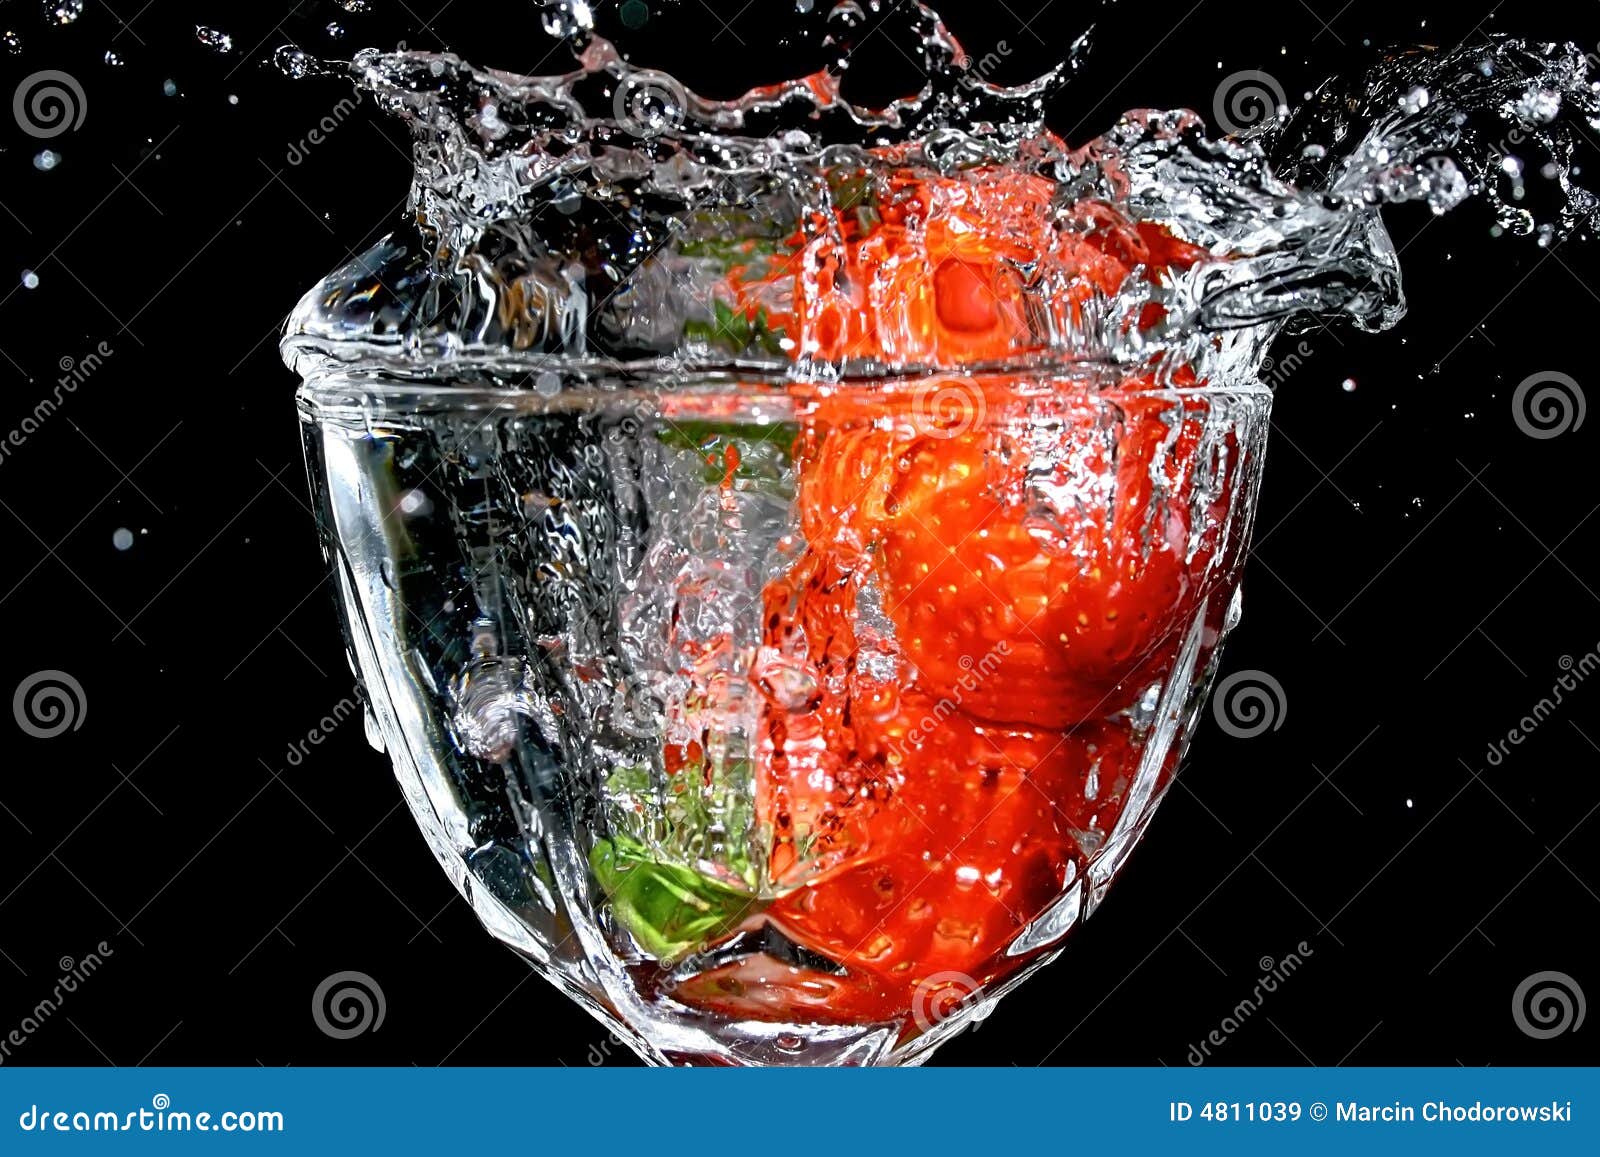 strawberries splashed in water